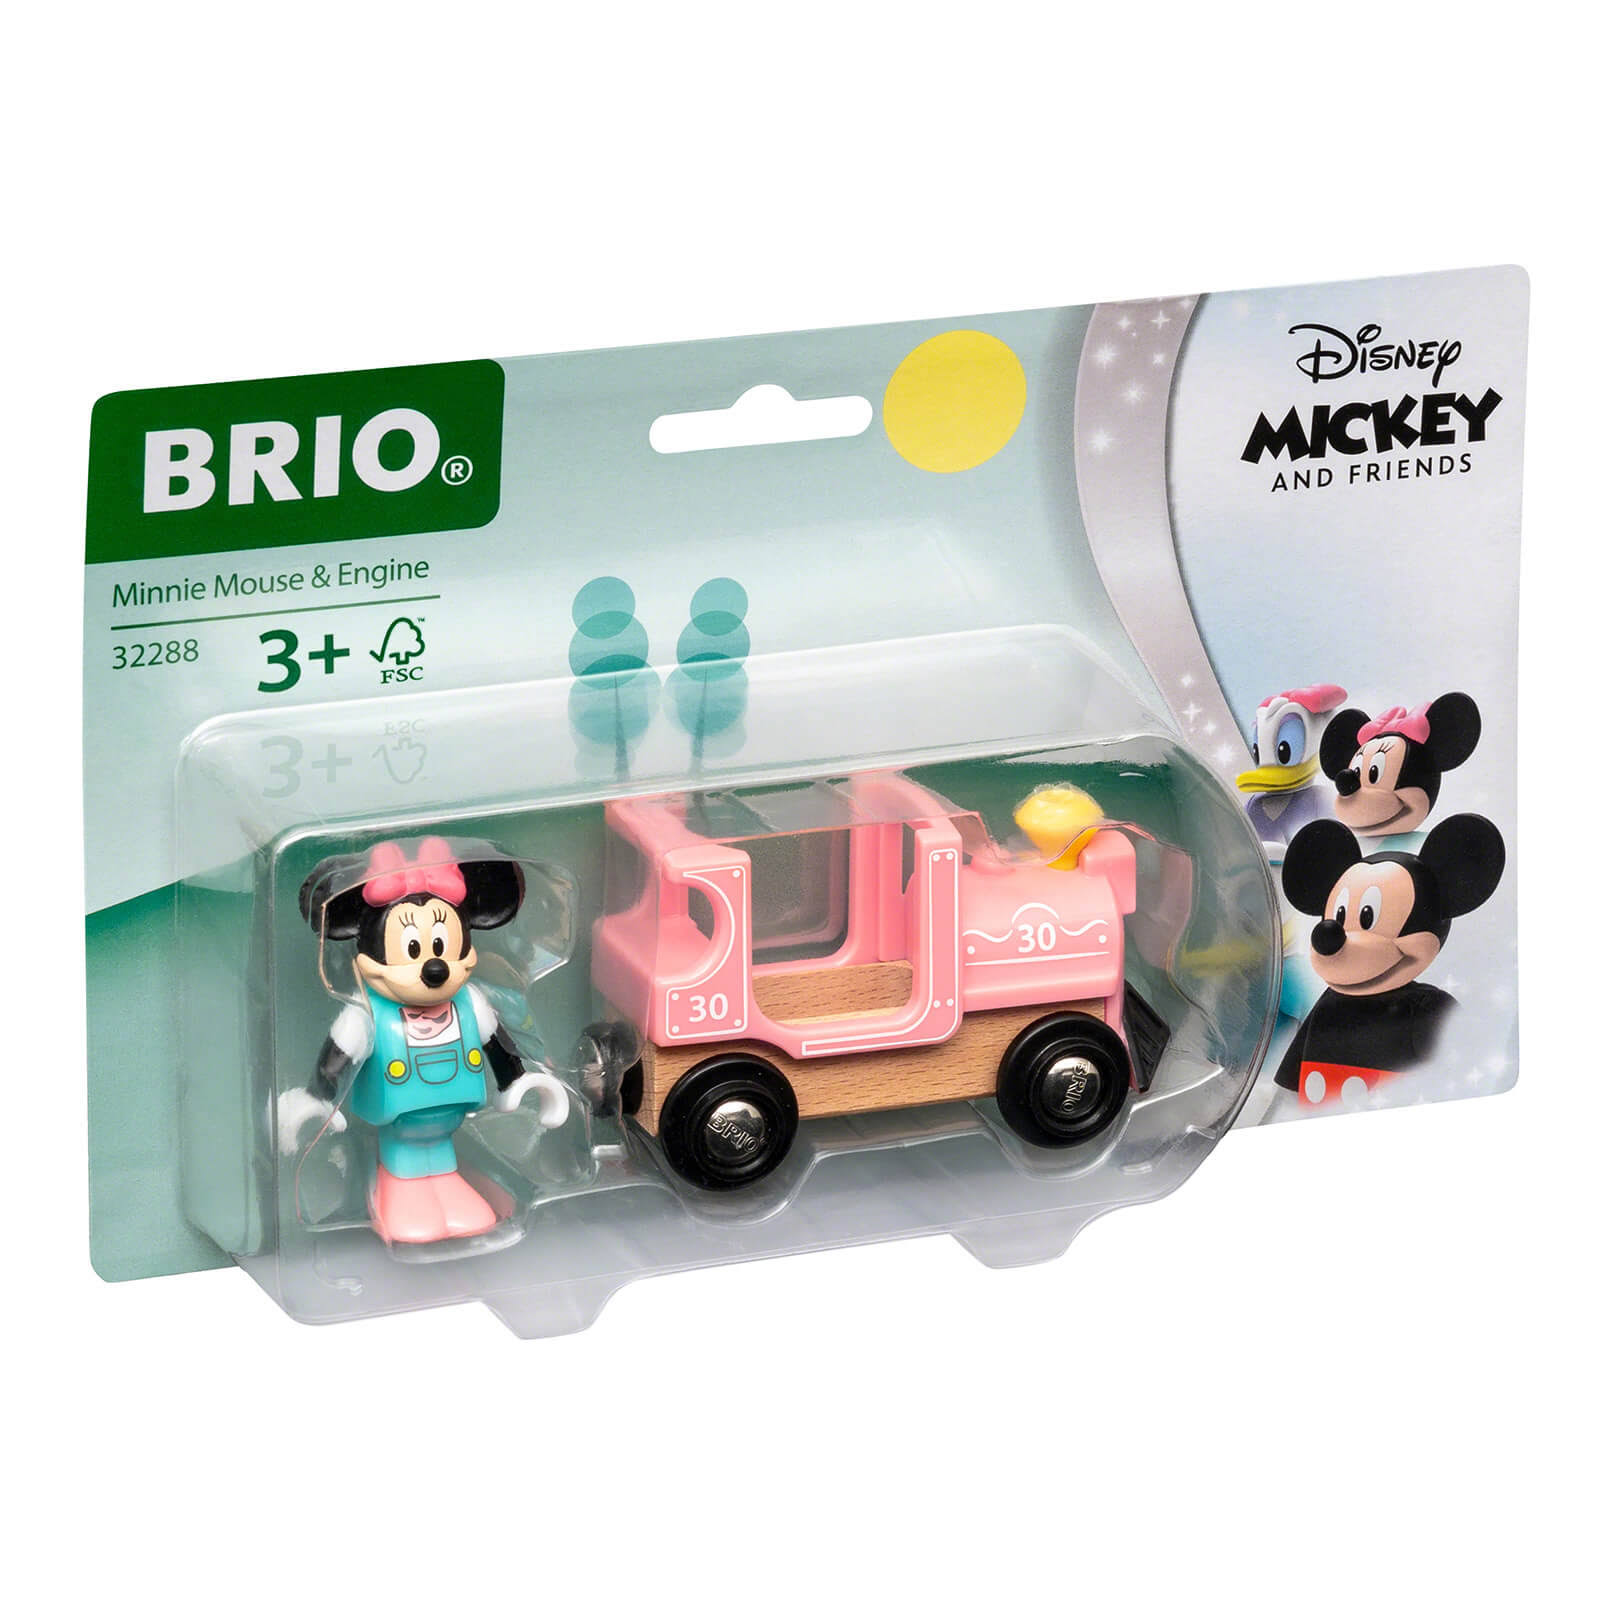 BRIO - 32288 | Minnie Mouse & Engine